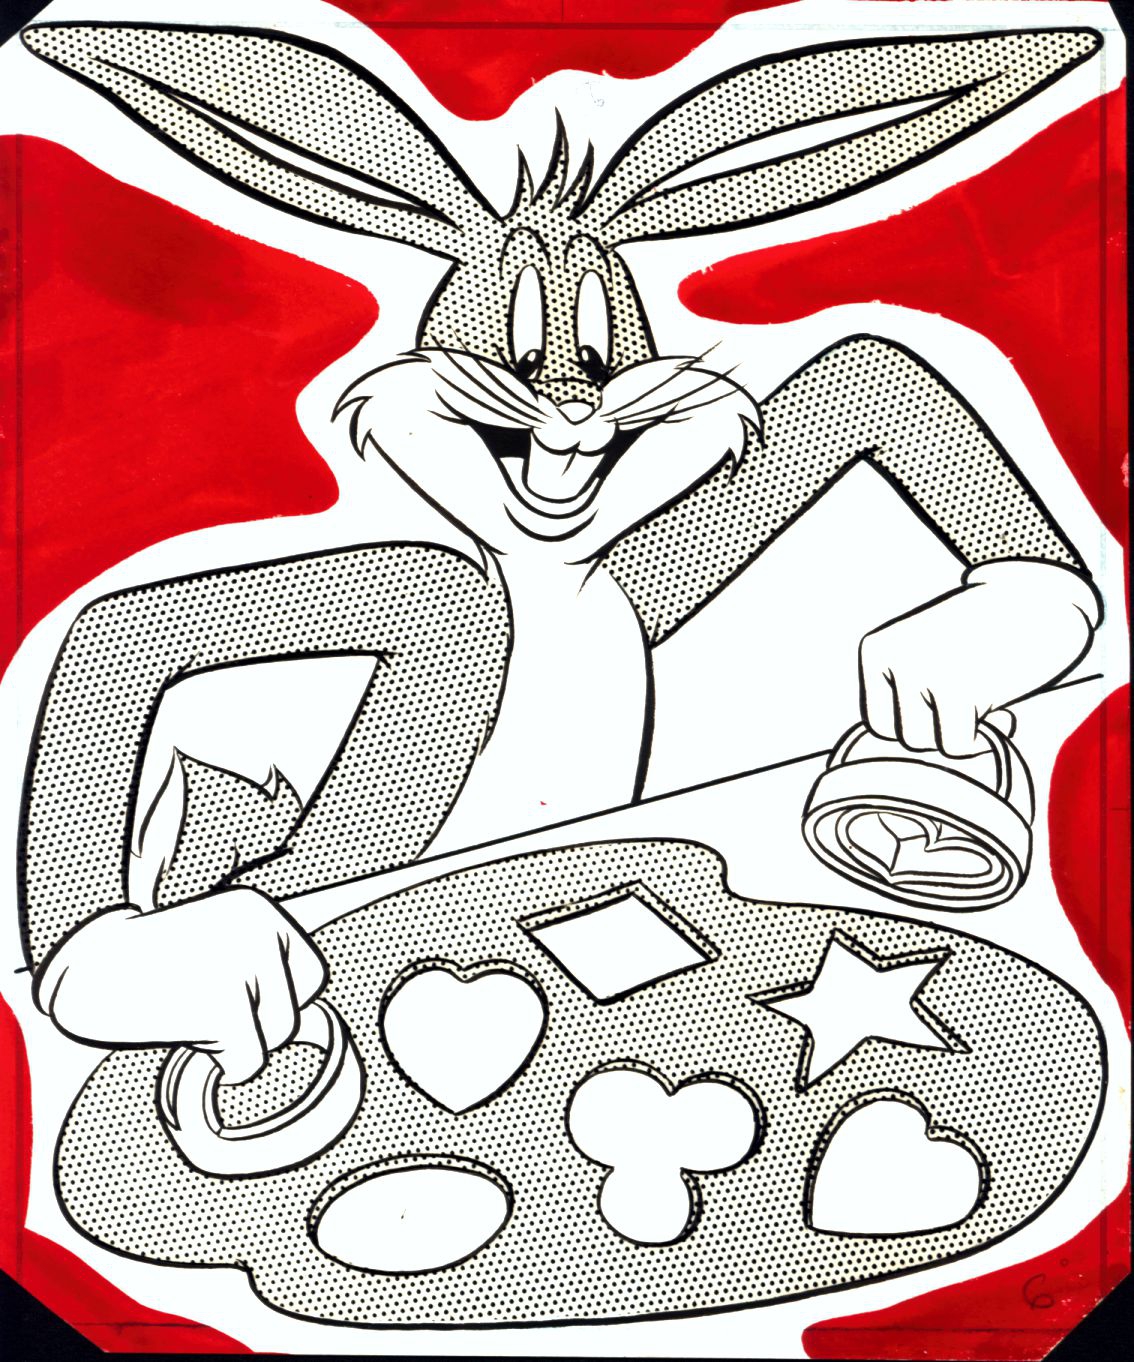 Bugs Bunny artwork